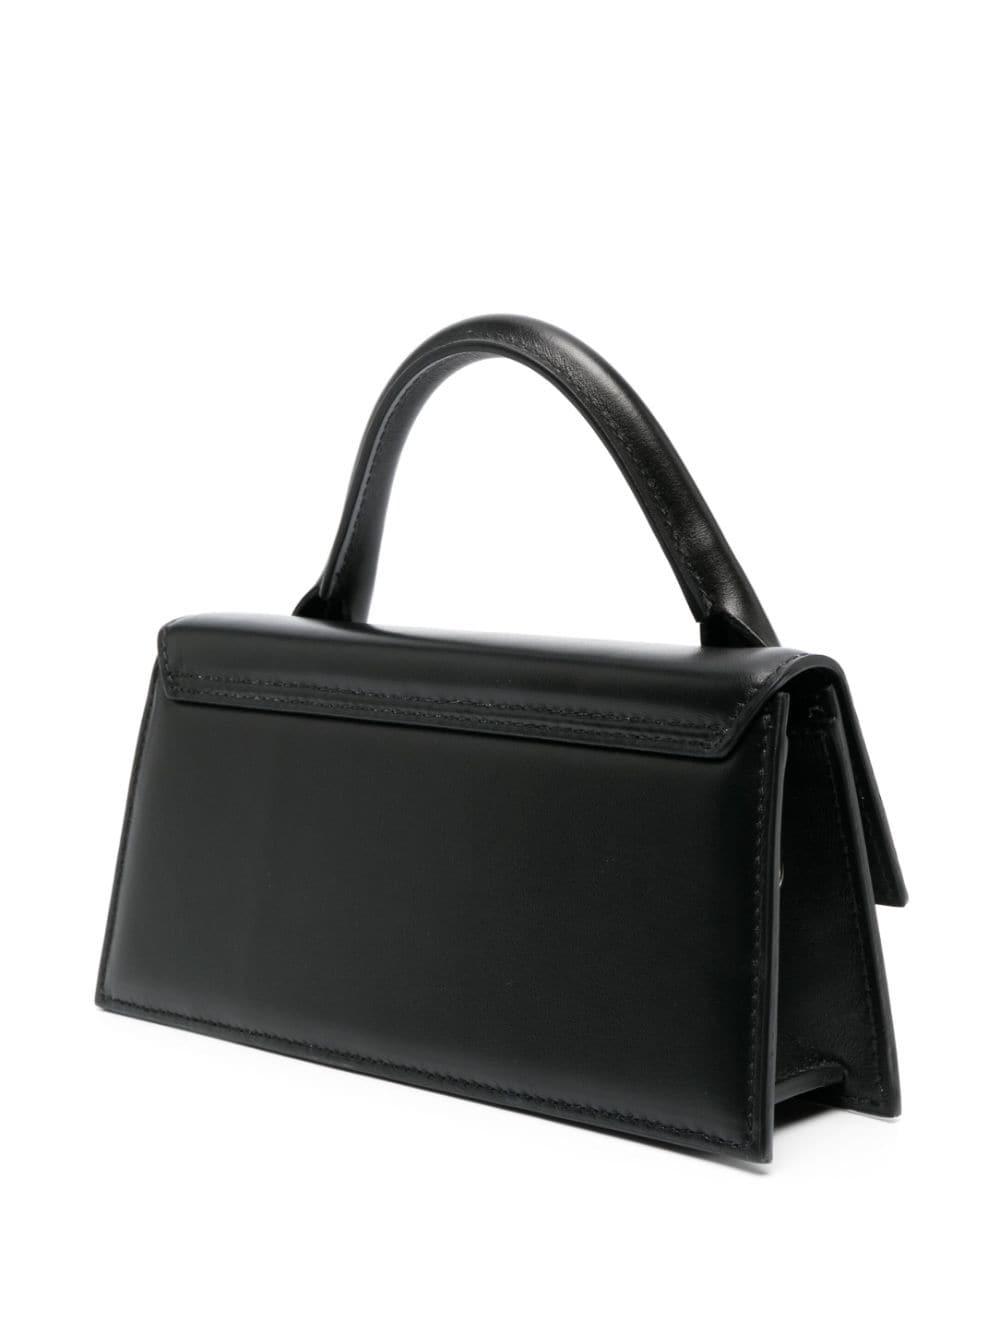 Jacquemus Le Chiquito Long Leather Shoulder Bag in Black